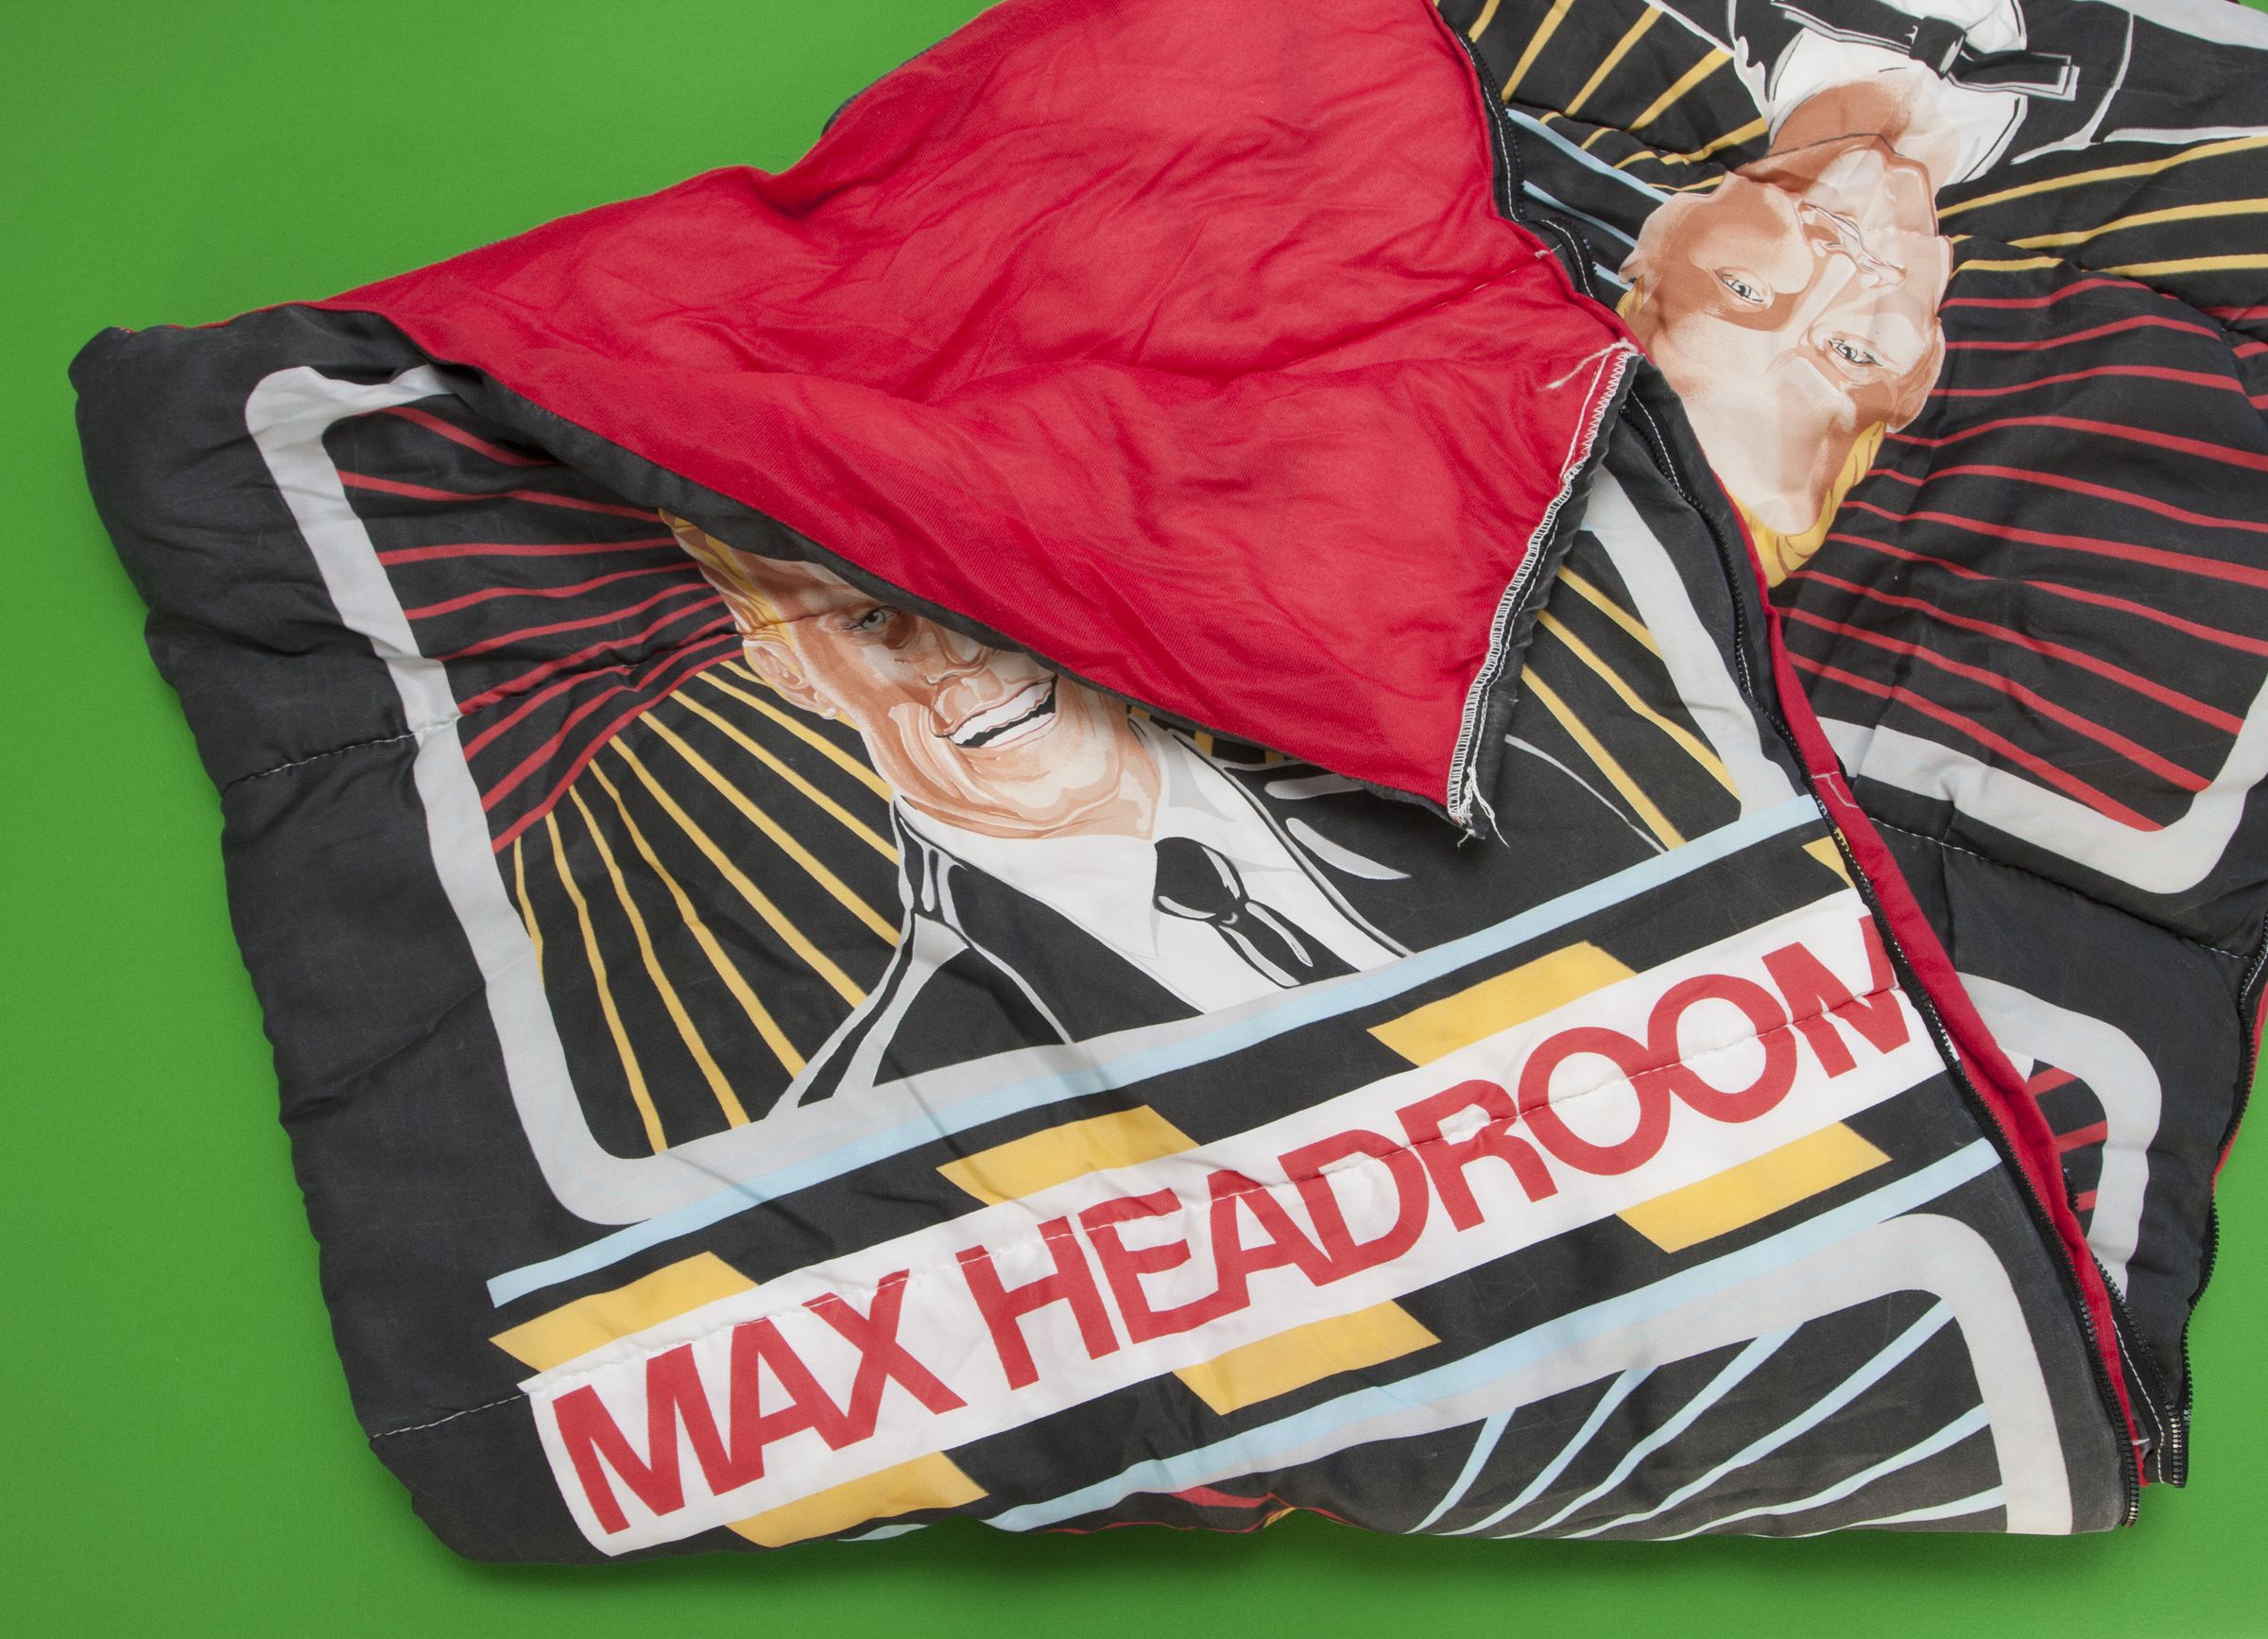 The merchandising of Max Headroom